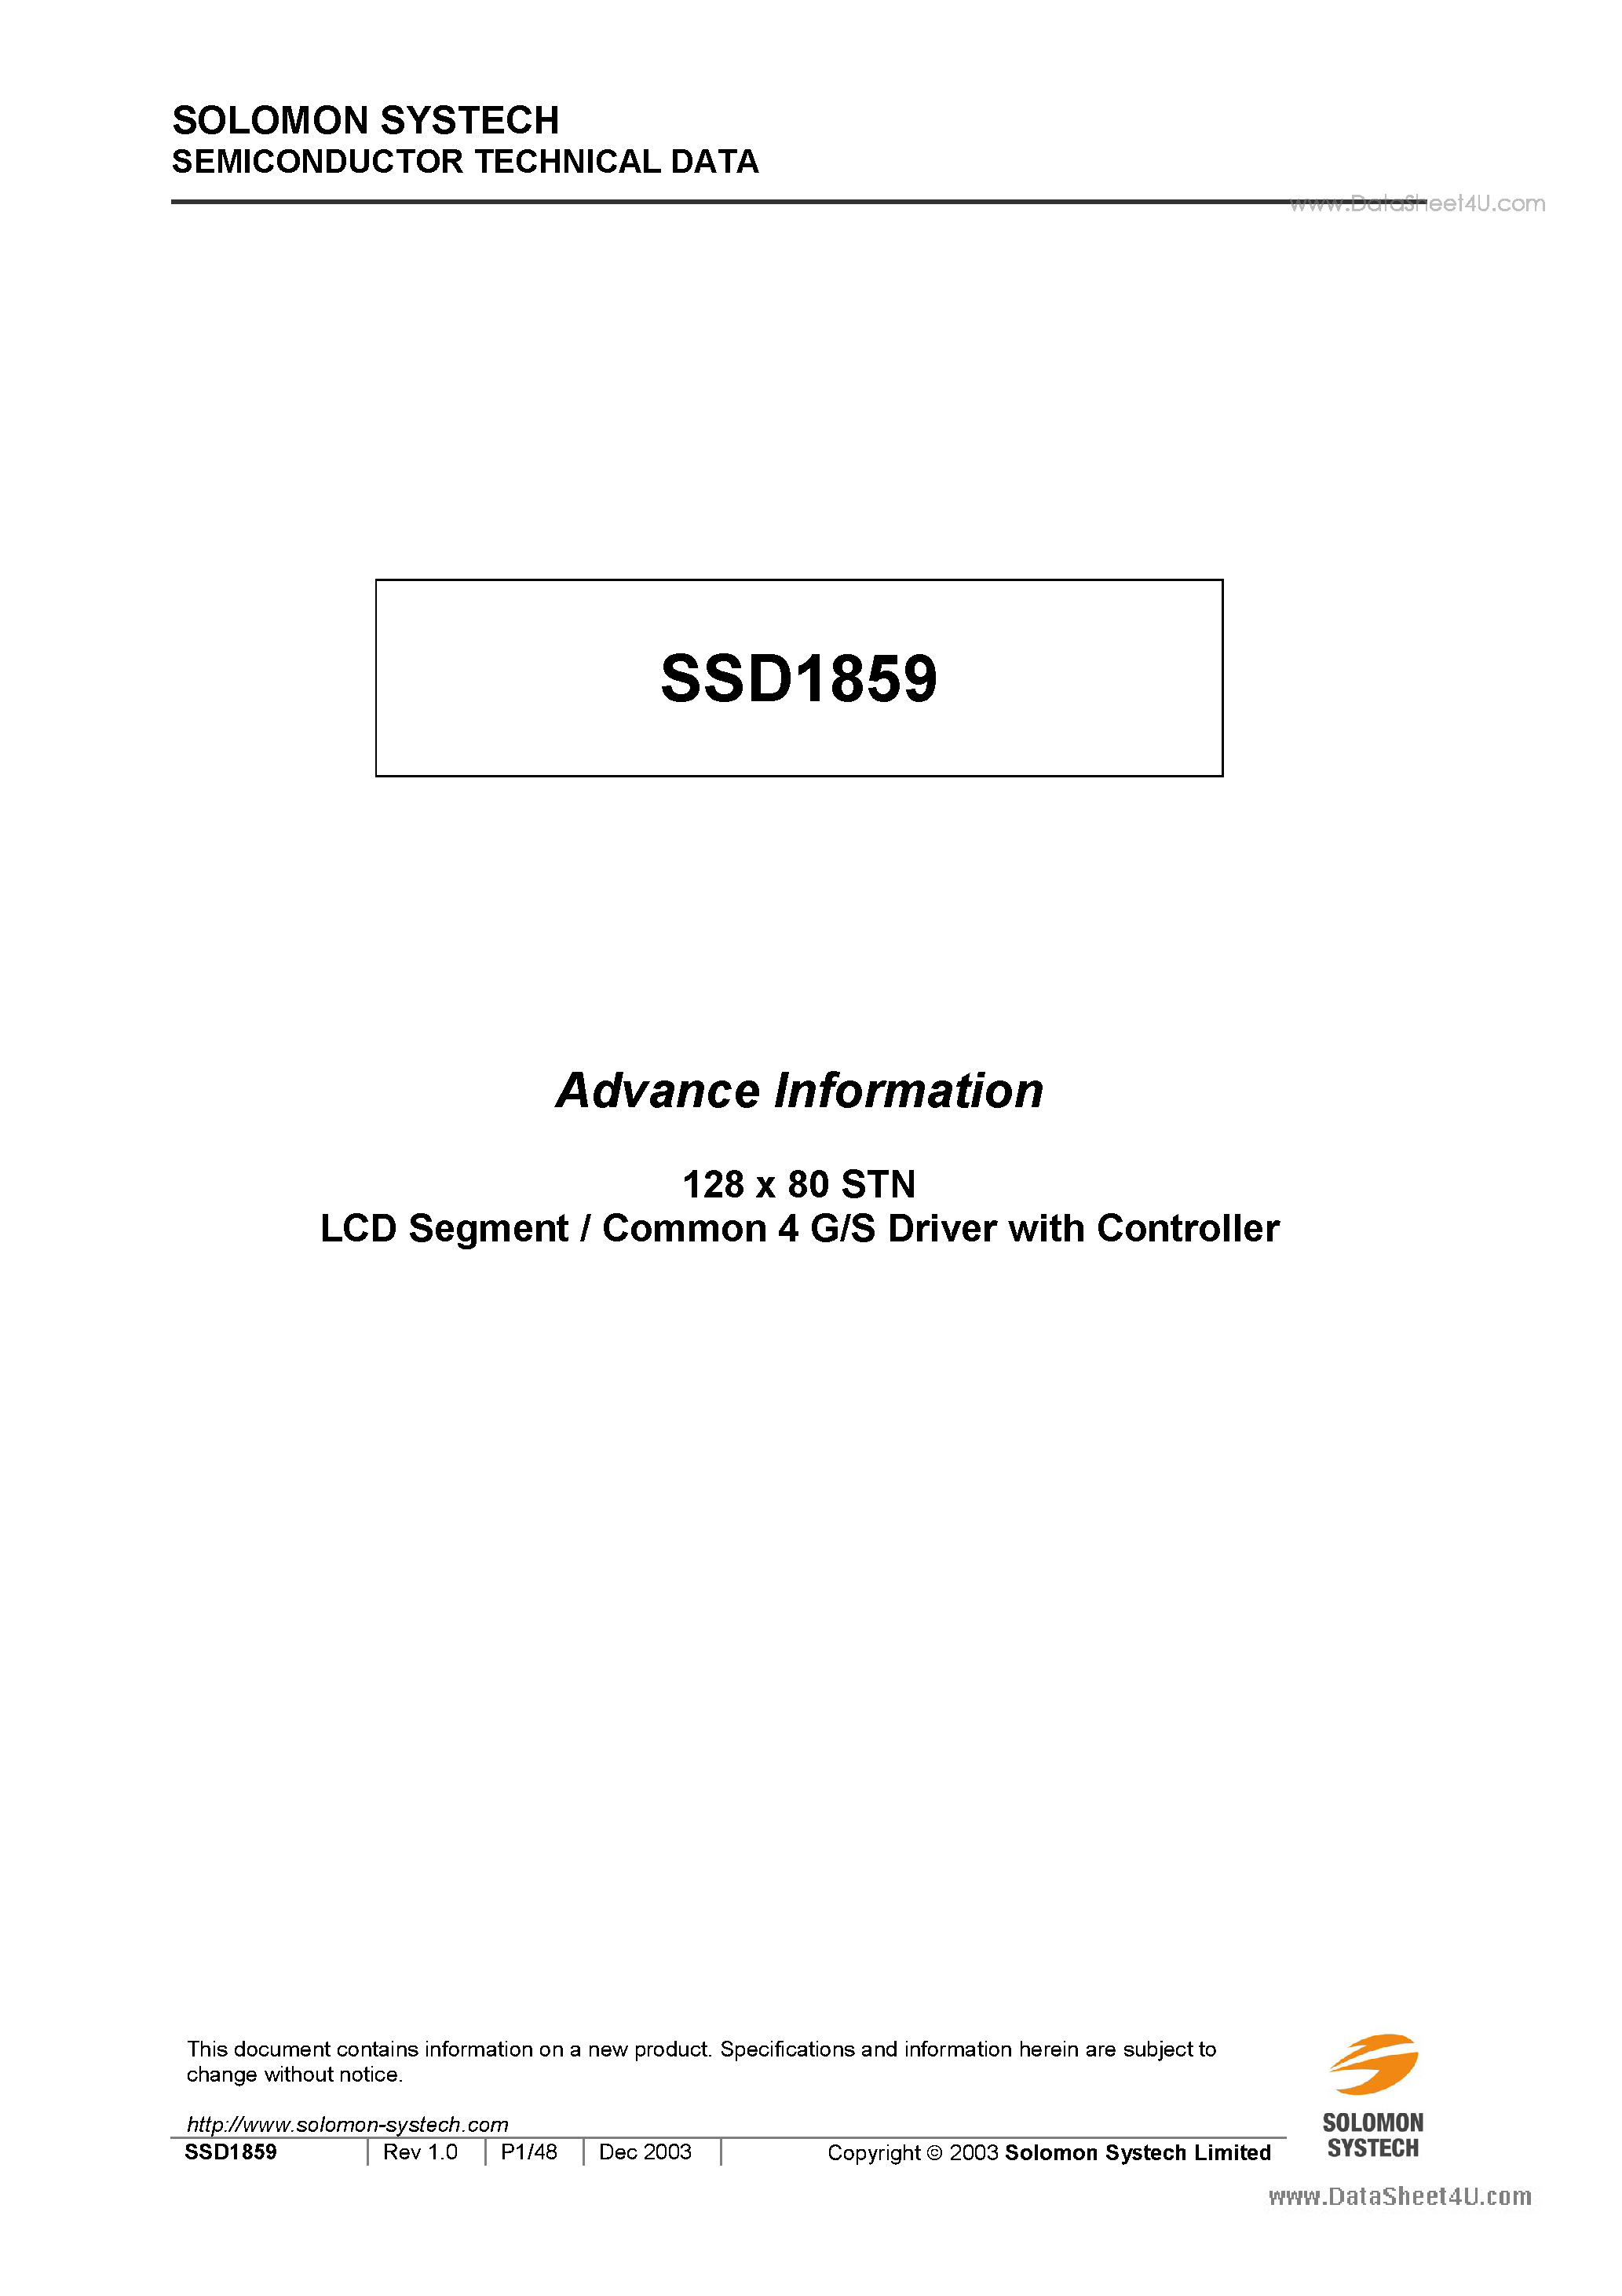 Datasheet SSD1859 - 128 x 80 STN LCD Segment / Common 4 G/S Drive page 1